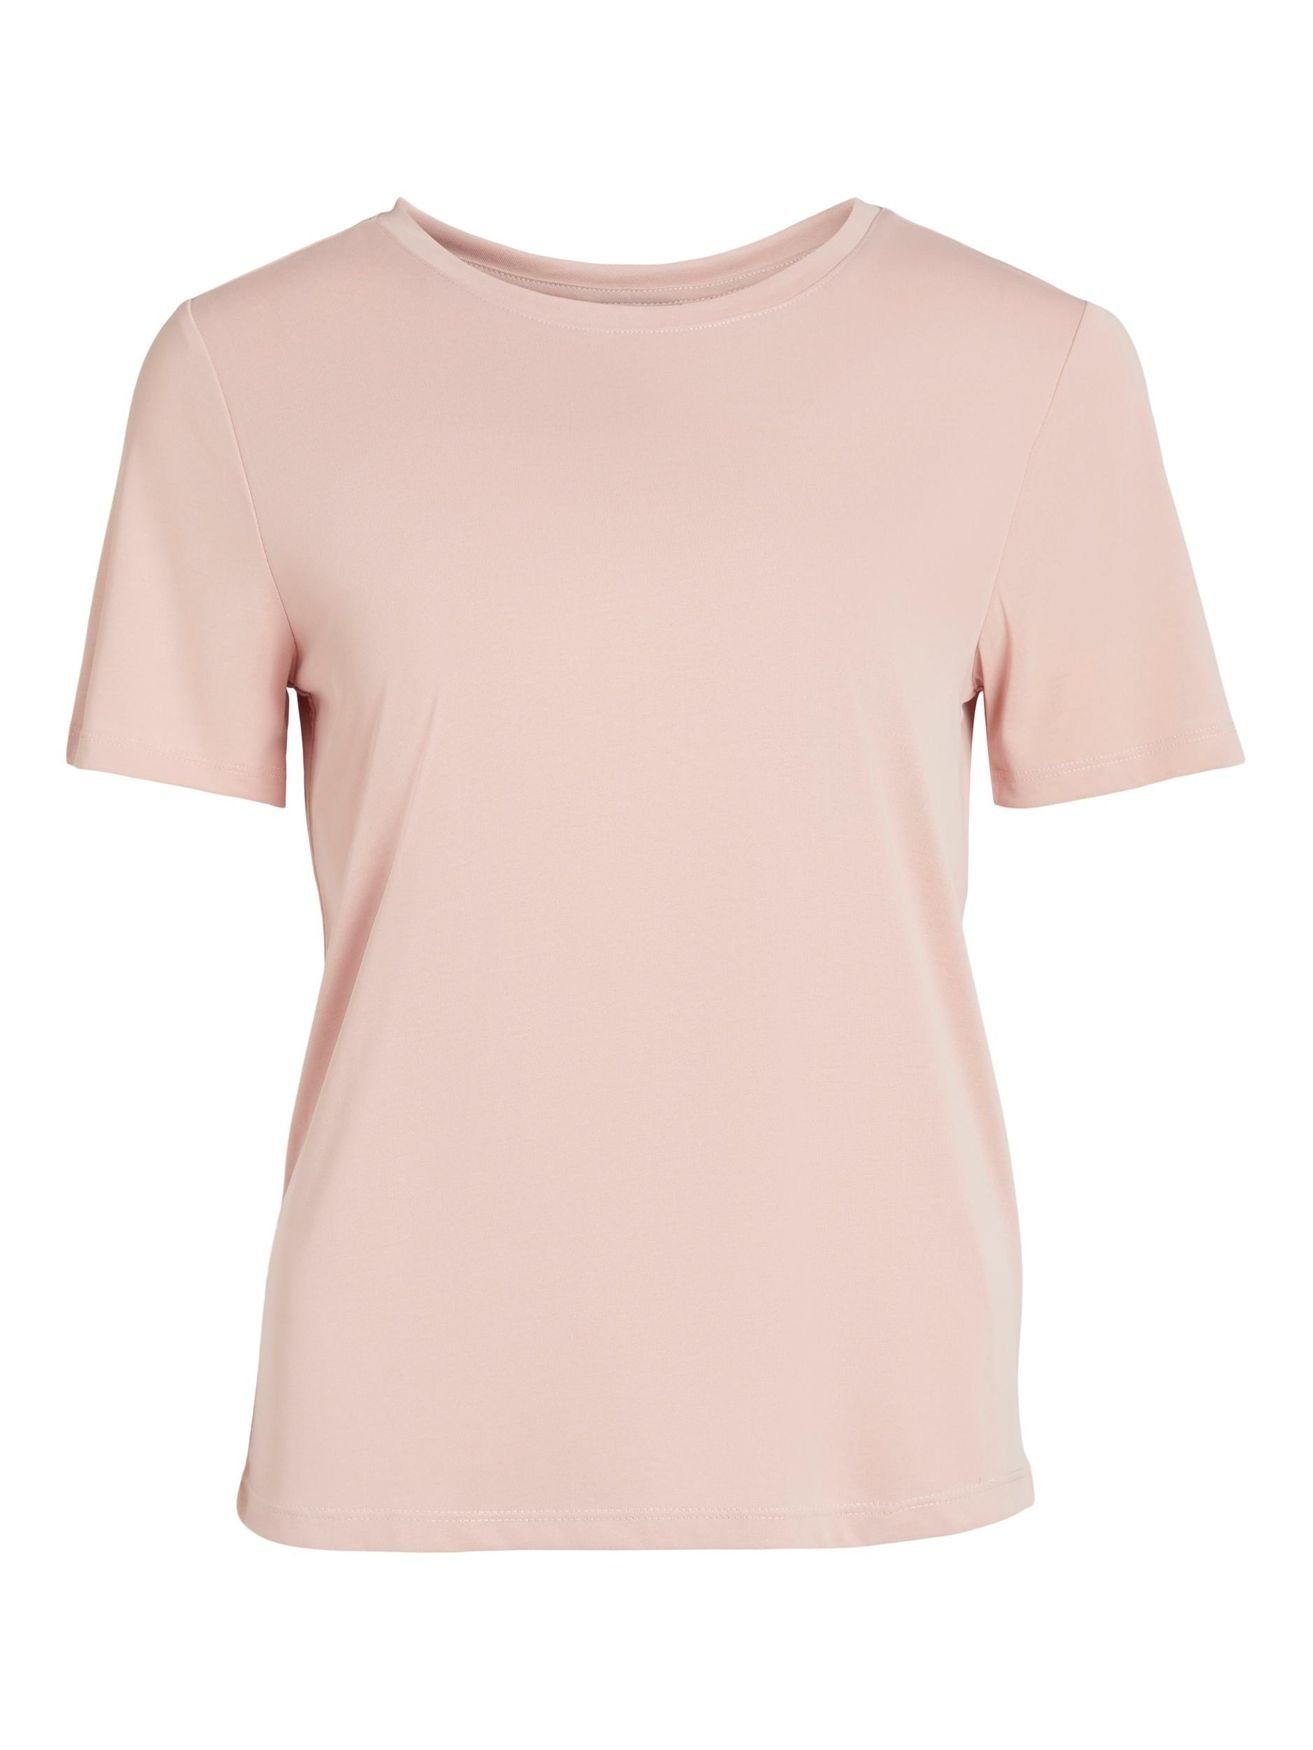 Vila T-Shirt in Rosa Kurzarm T-Shirt Top Rundhals Oberteil VIMODALA 4870 Basic